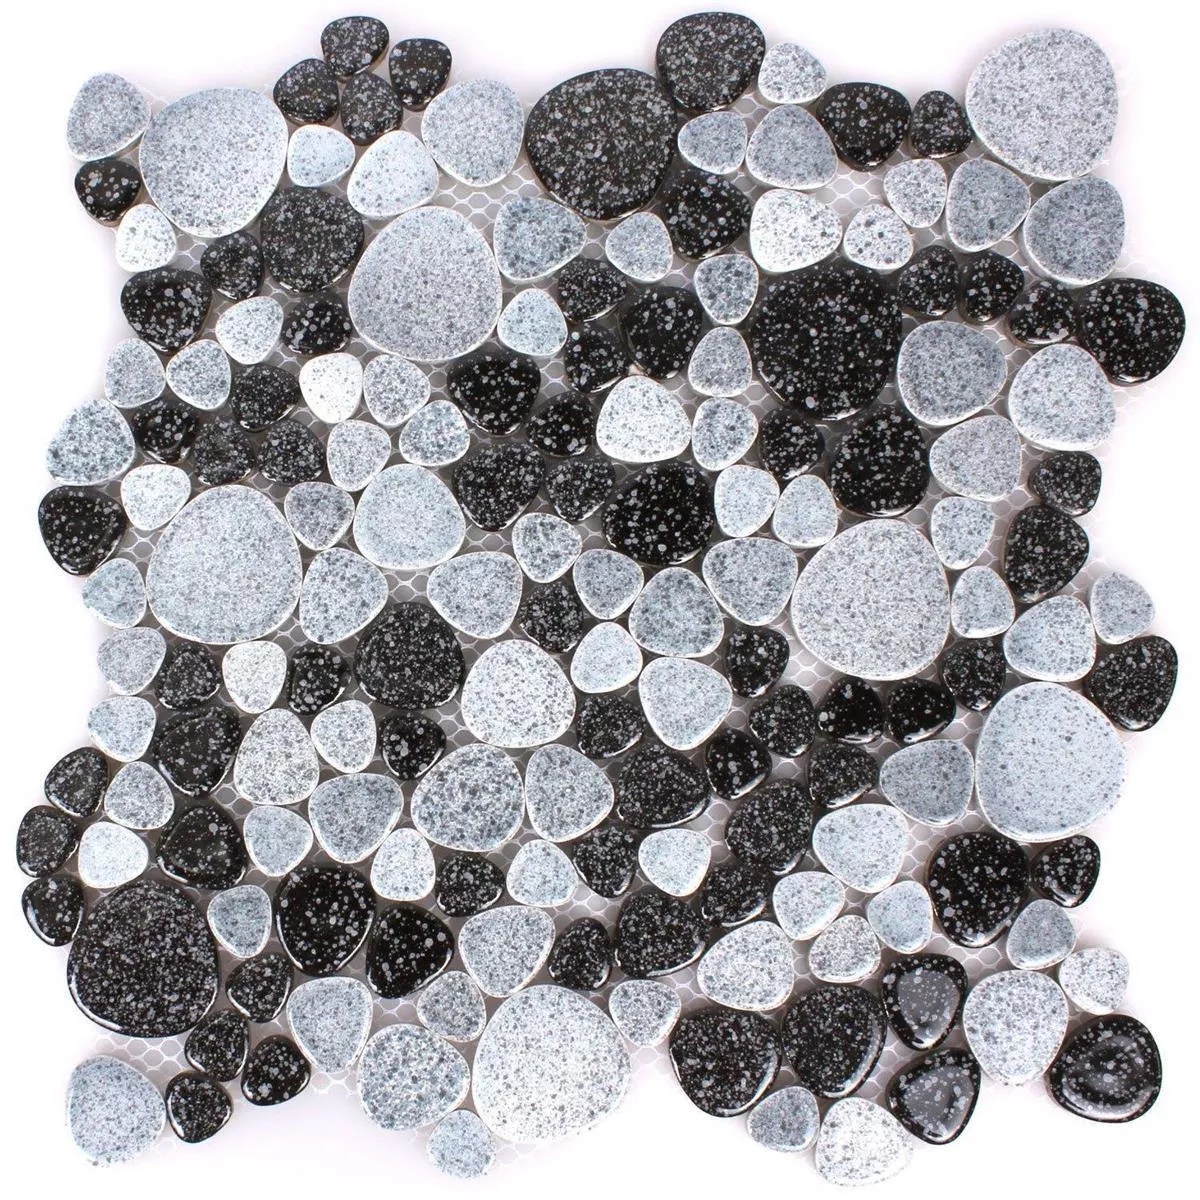 Sample Mosaic Tiles Ceramic Pebble Optic Black White